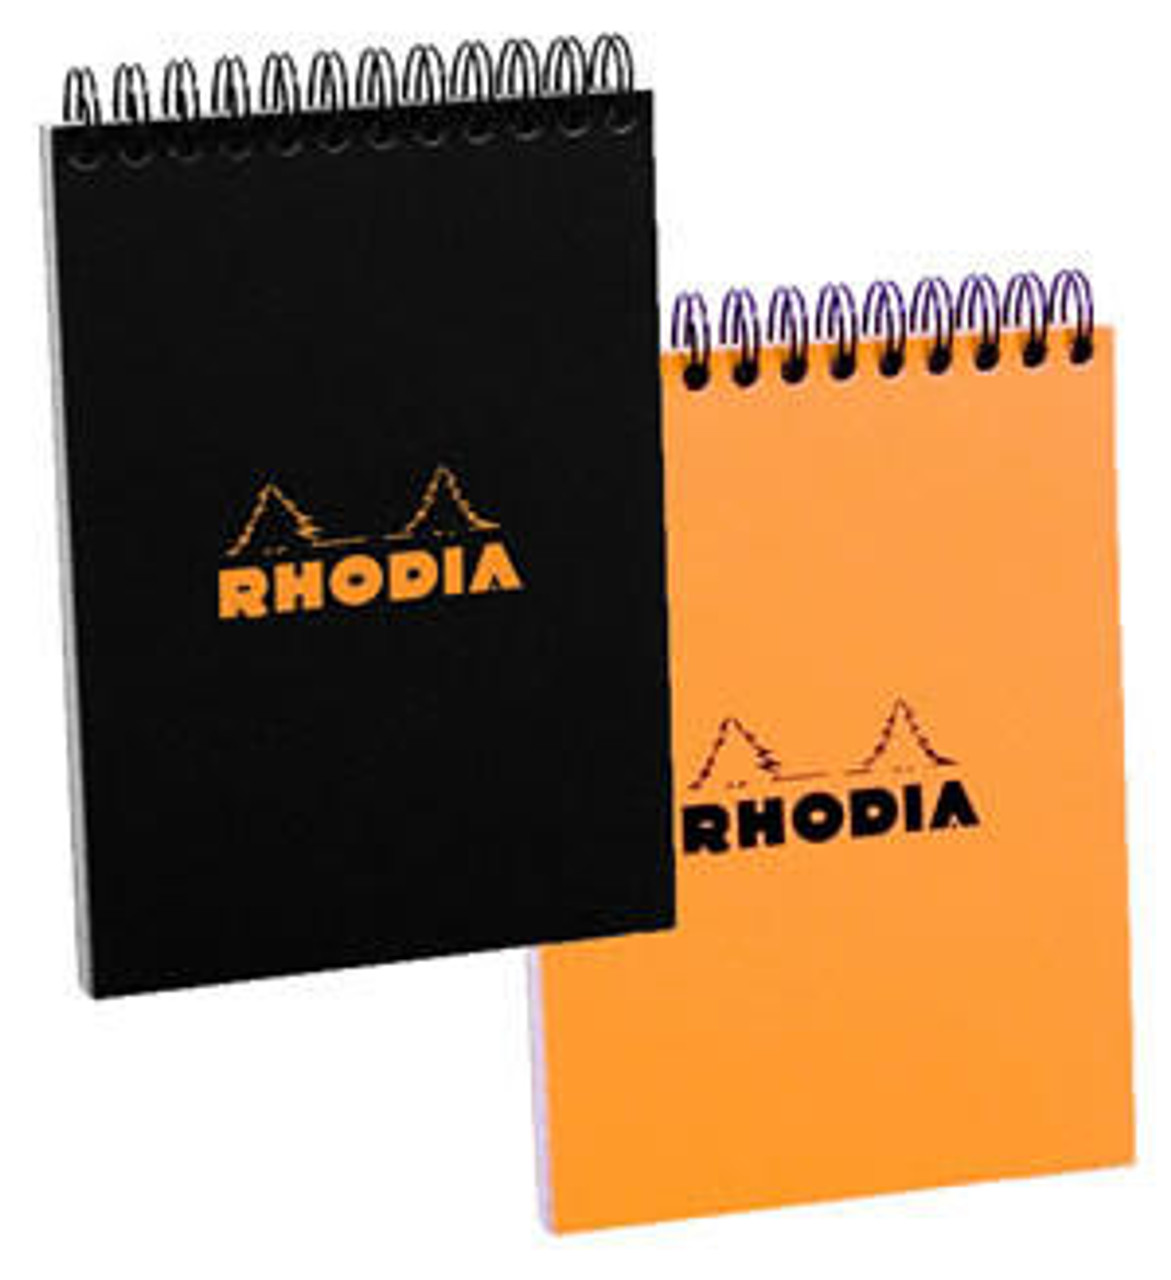 Rhodia Bristol Paper Sketchbook